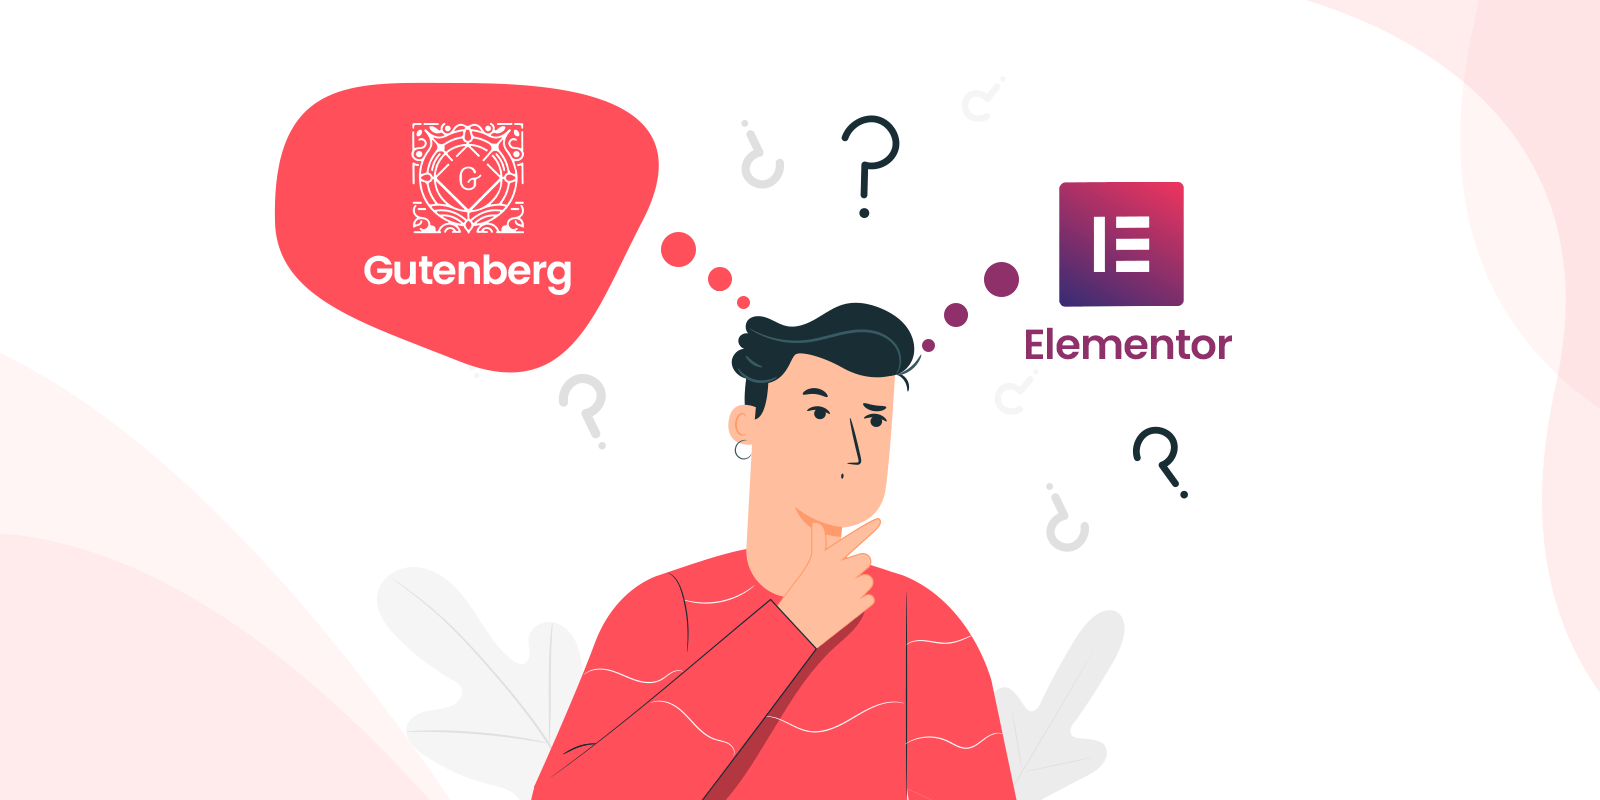 Making decision between Gutenberg and Elementor